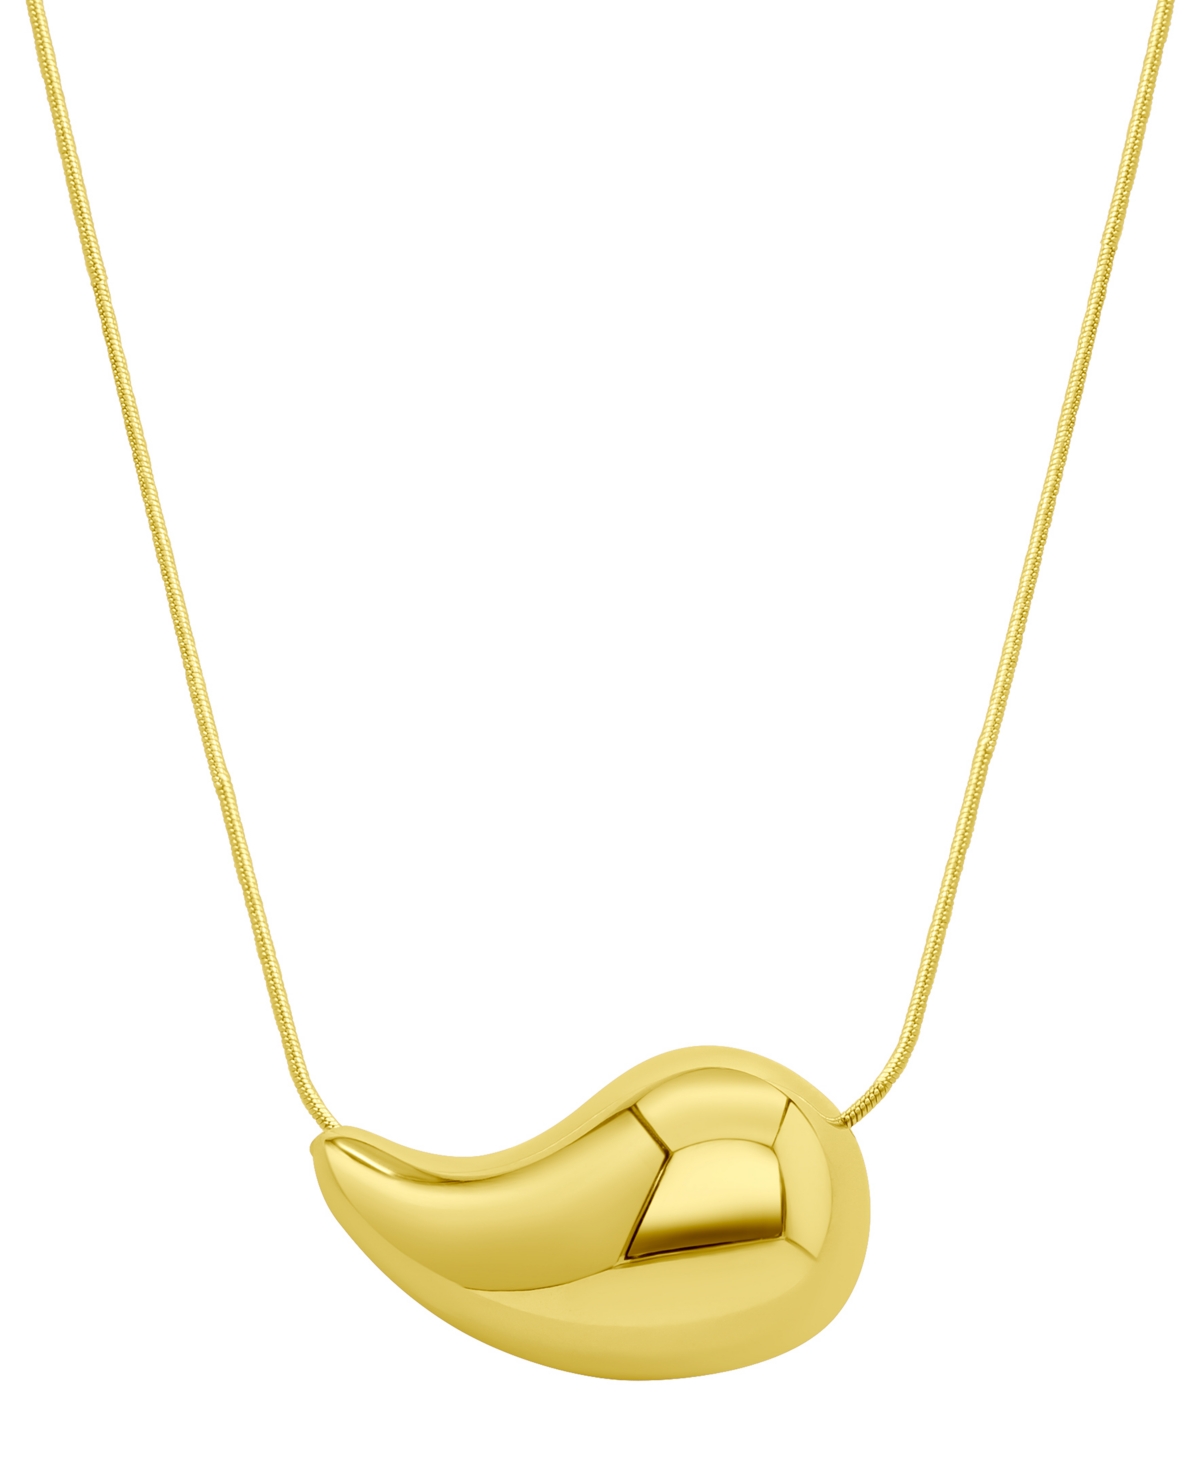 Tarnish Resistant 14K Gold-Plated Teardrop Sculptural Necklace - Gold